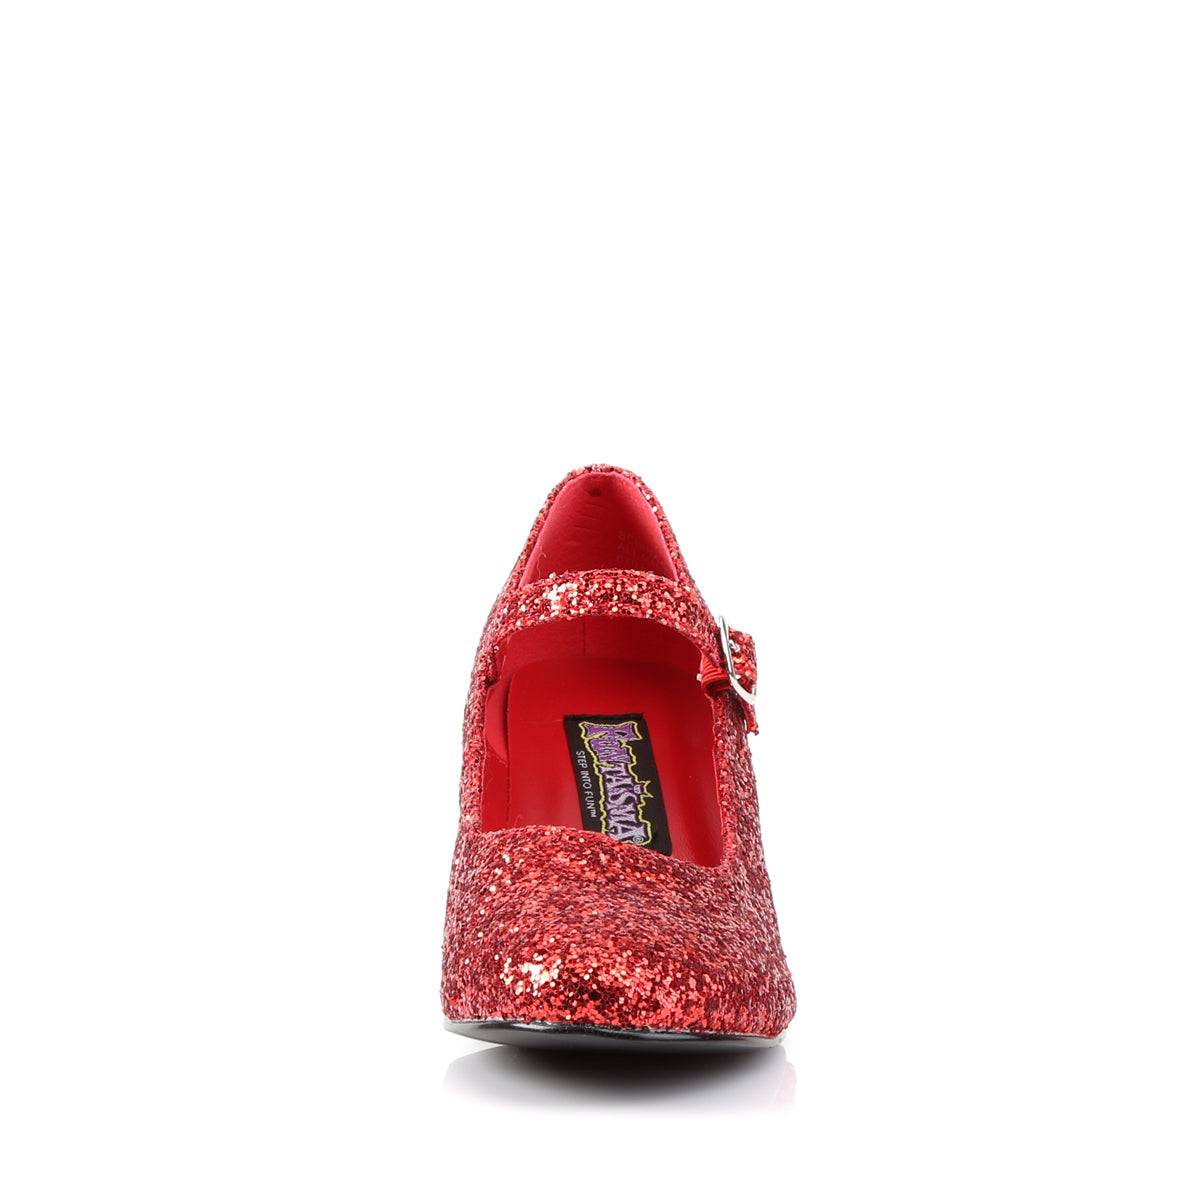 SCHOOLGIRL-50G 2 Inch Heel Red Glitter Costume Shoes Funtasma Costume Shoes Alternative Footwear